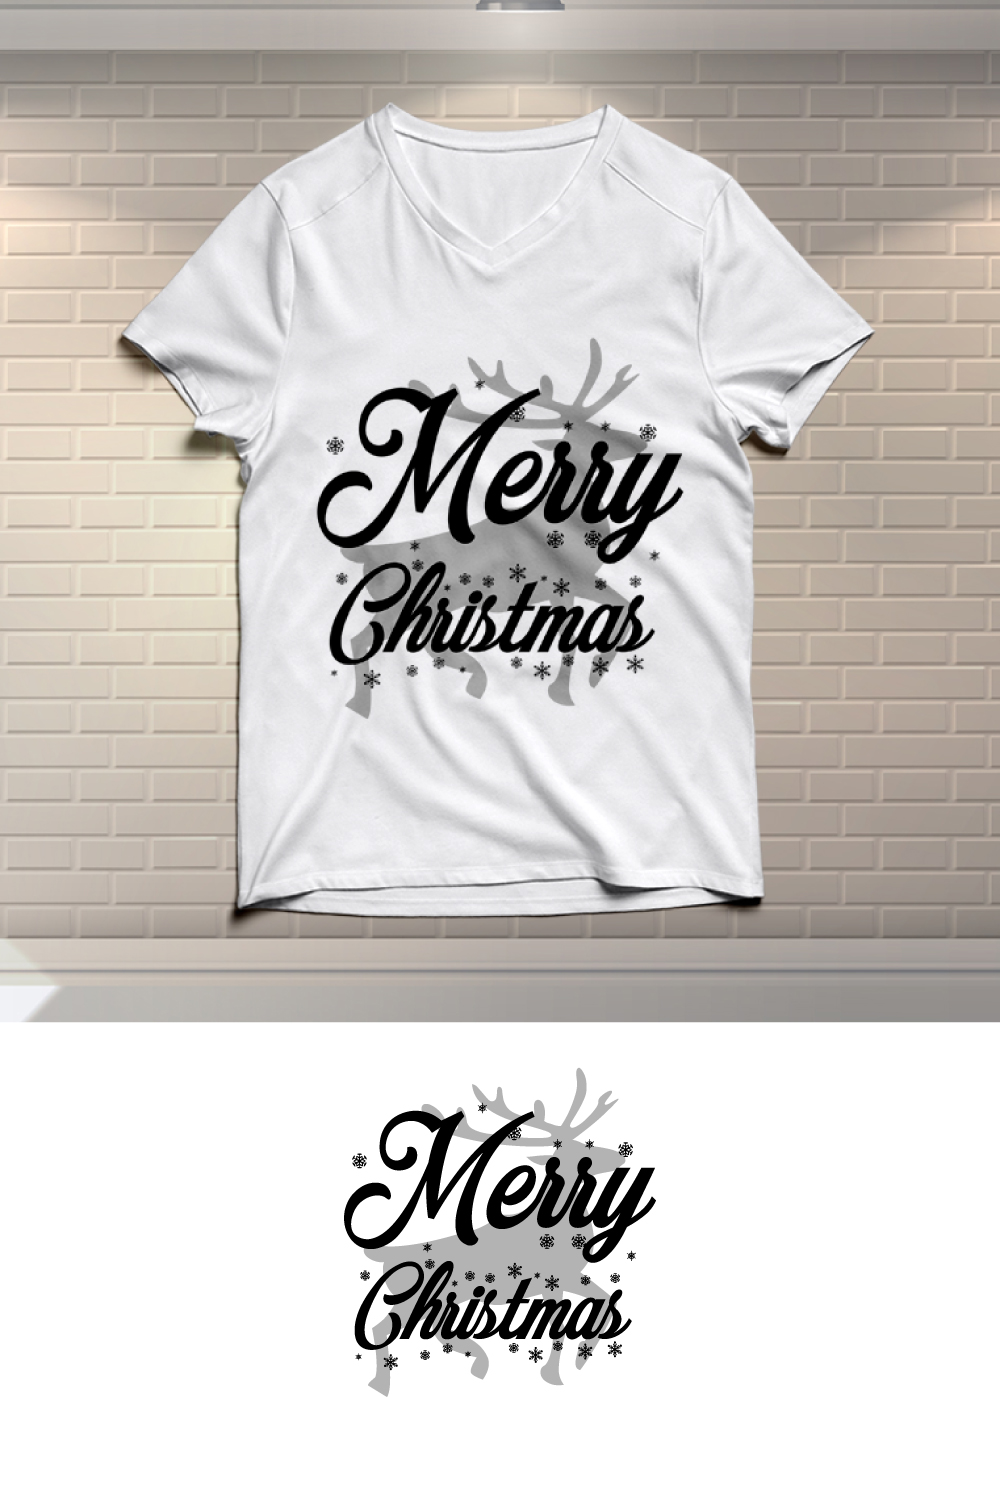 Merry Christmas T-shirt Design pinterest image.